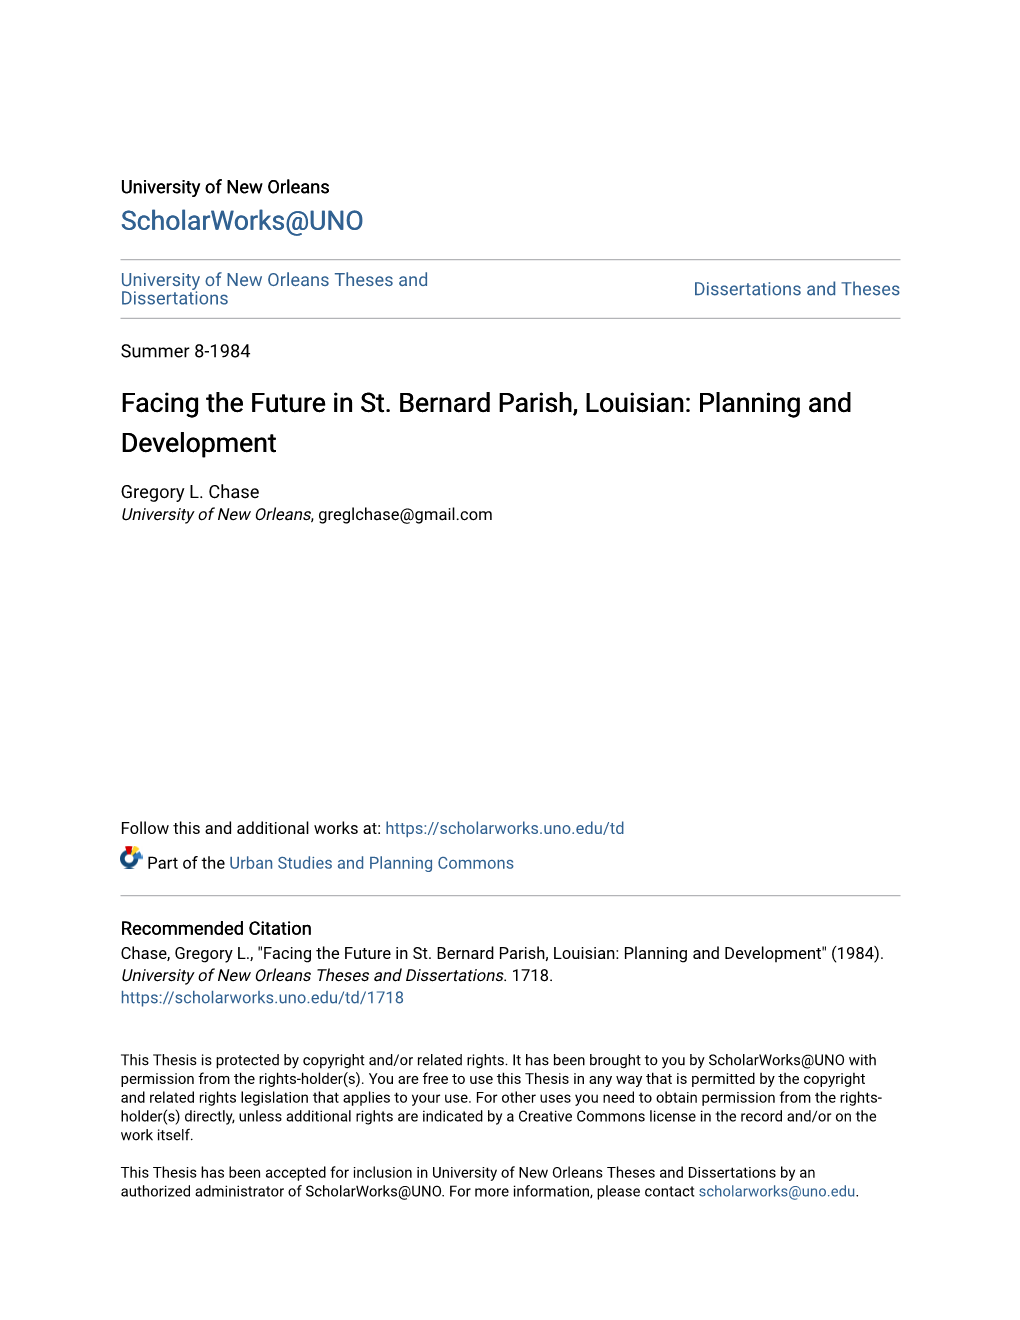 Facing the Future in St. Bernard Parish, Louisian: Planning and Development